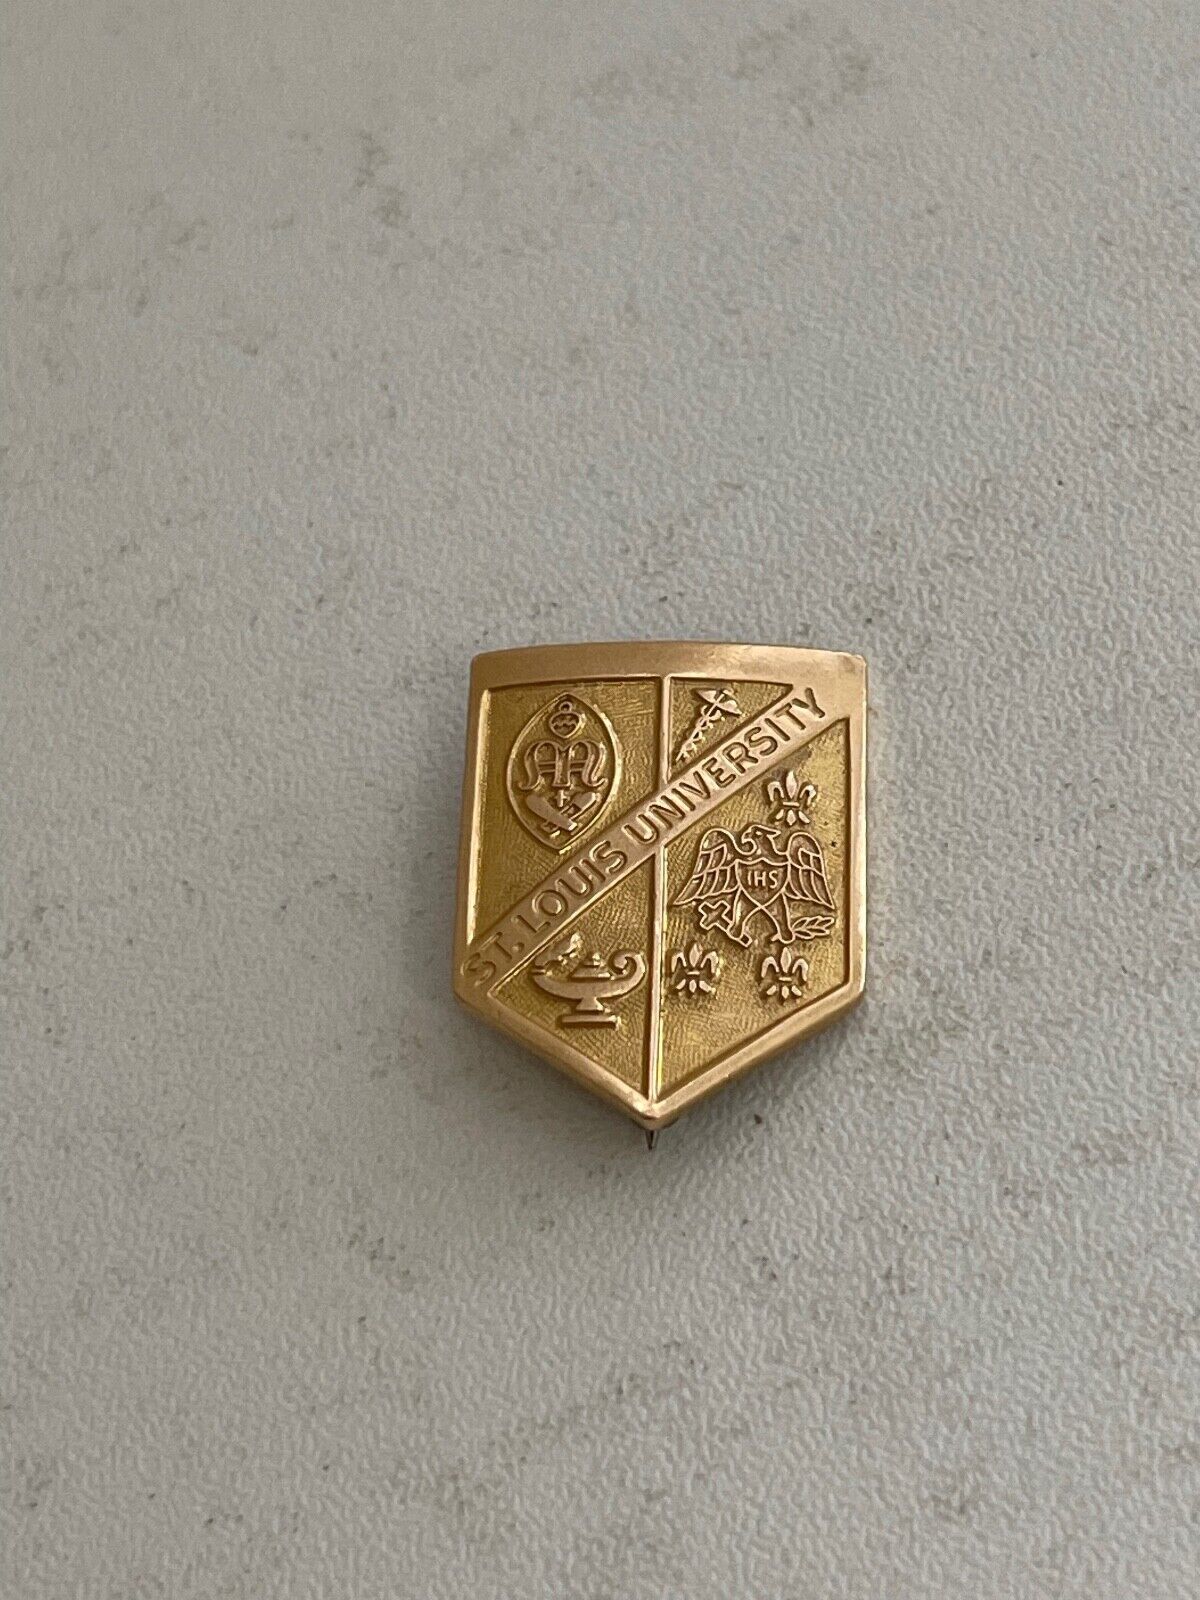 Vintage 1968 14k Gold St. Louis University Shield Form Pin